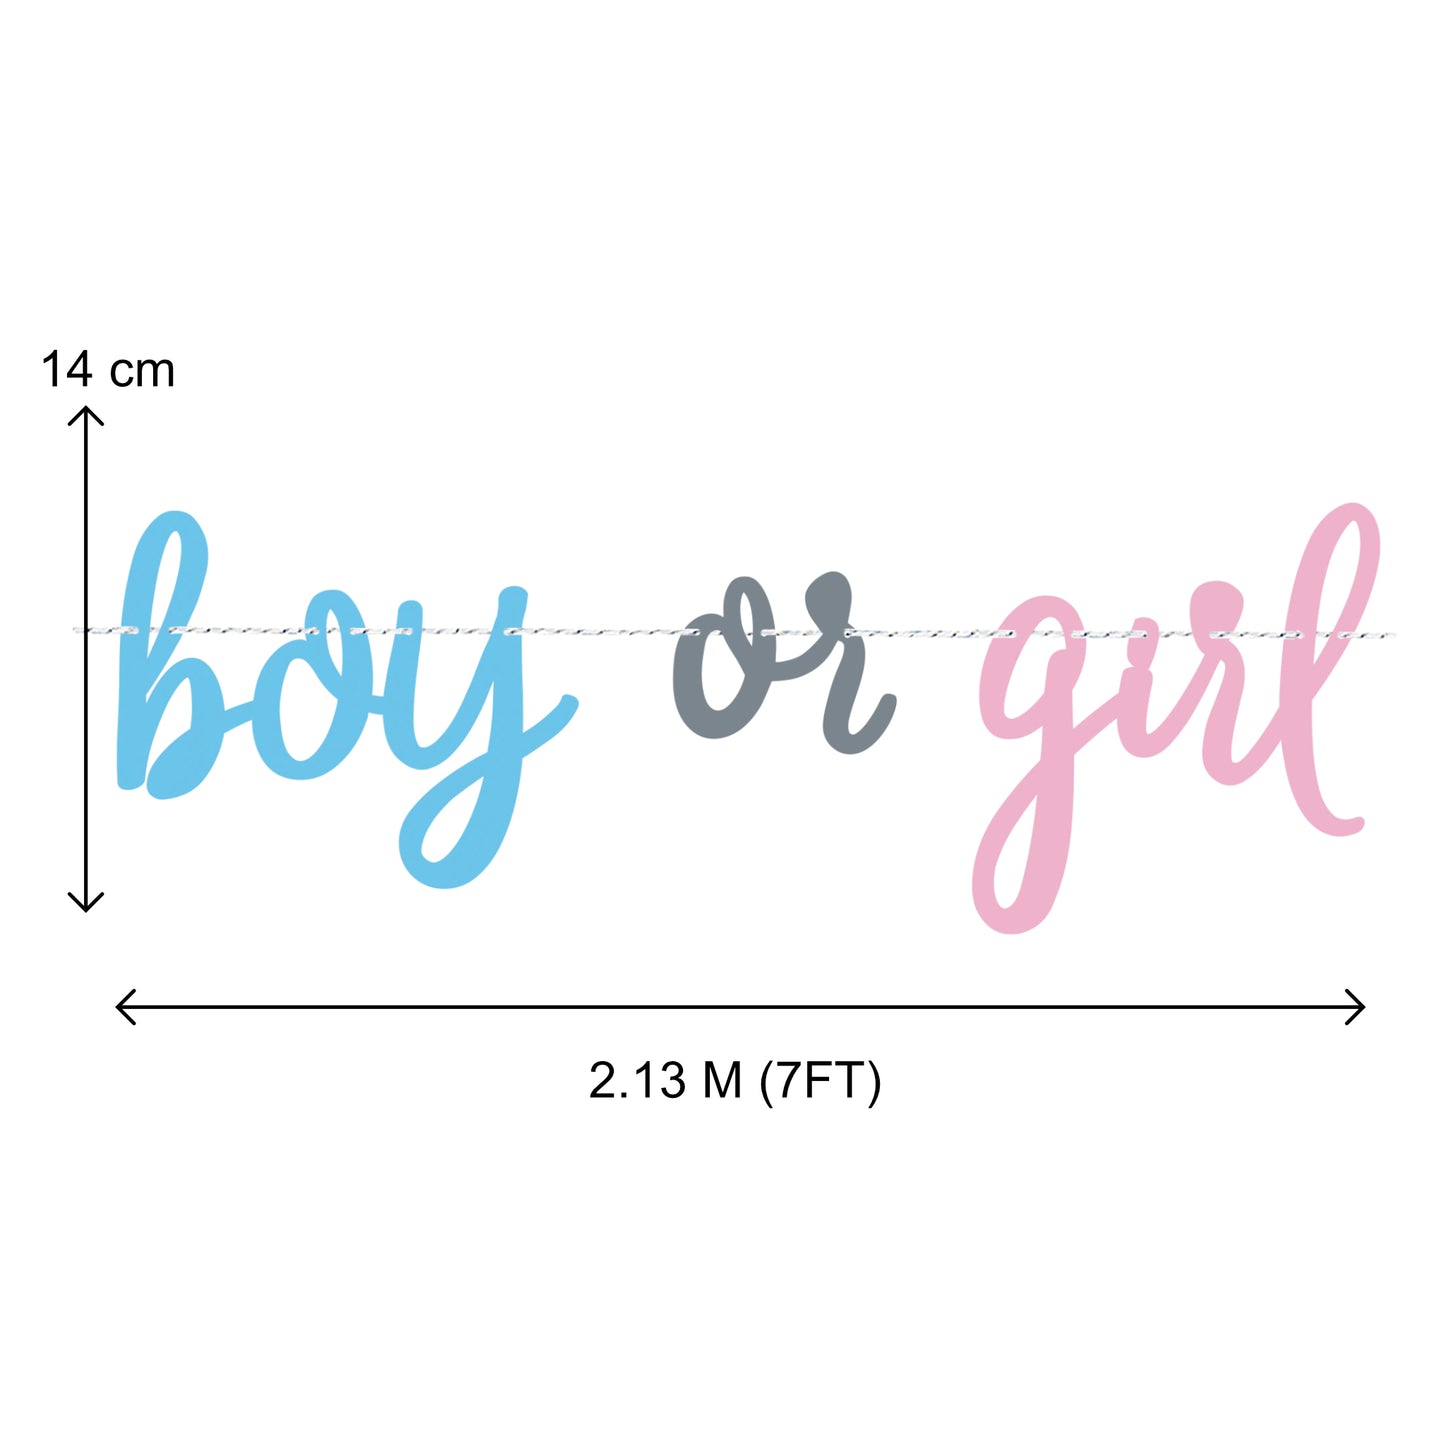 Gender Reveal 'Boy or Girl' Banner NEW